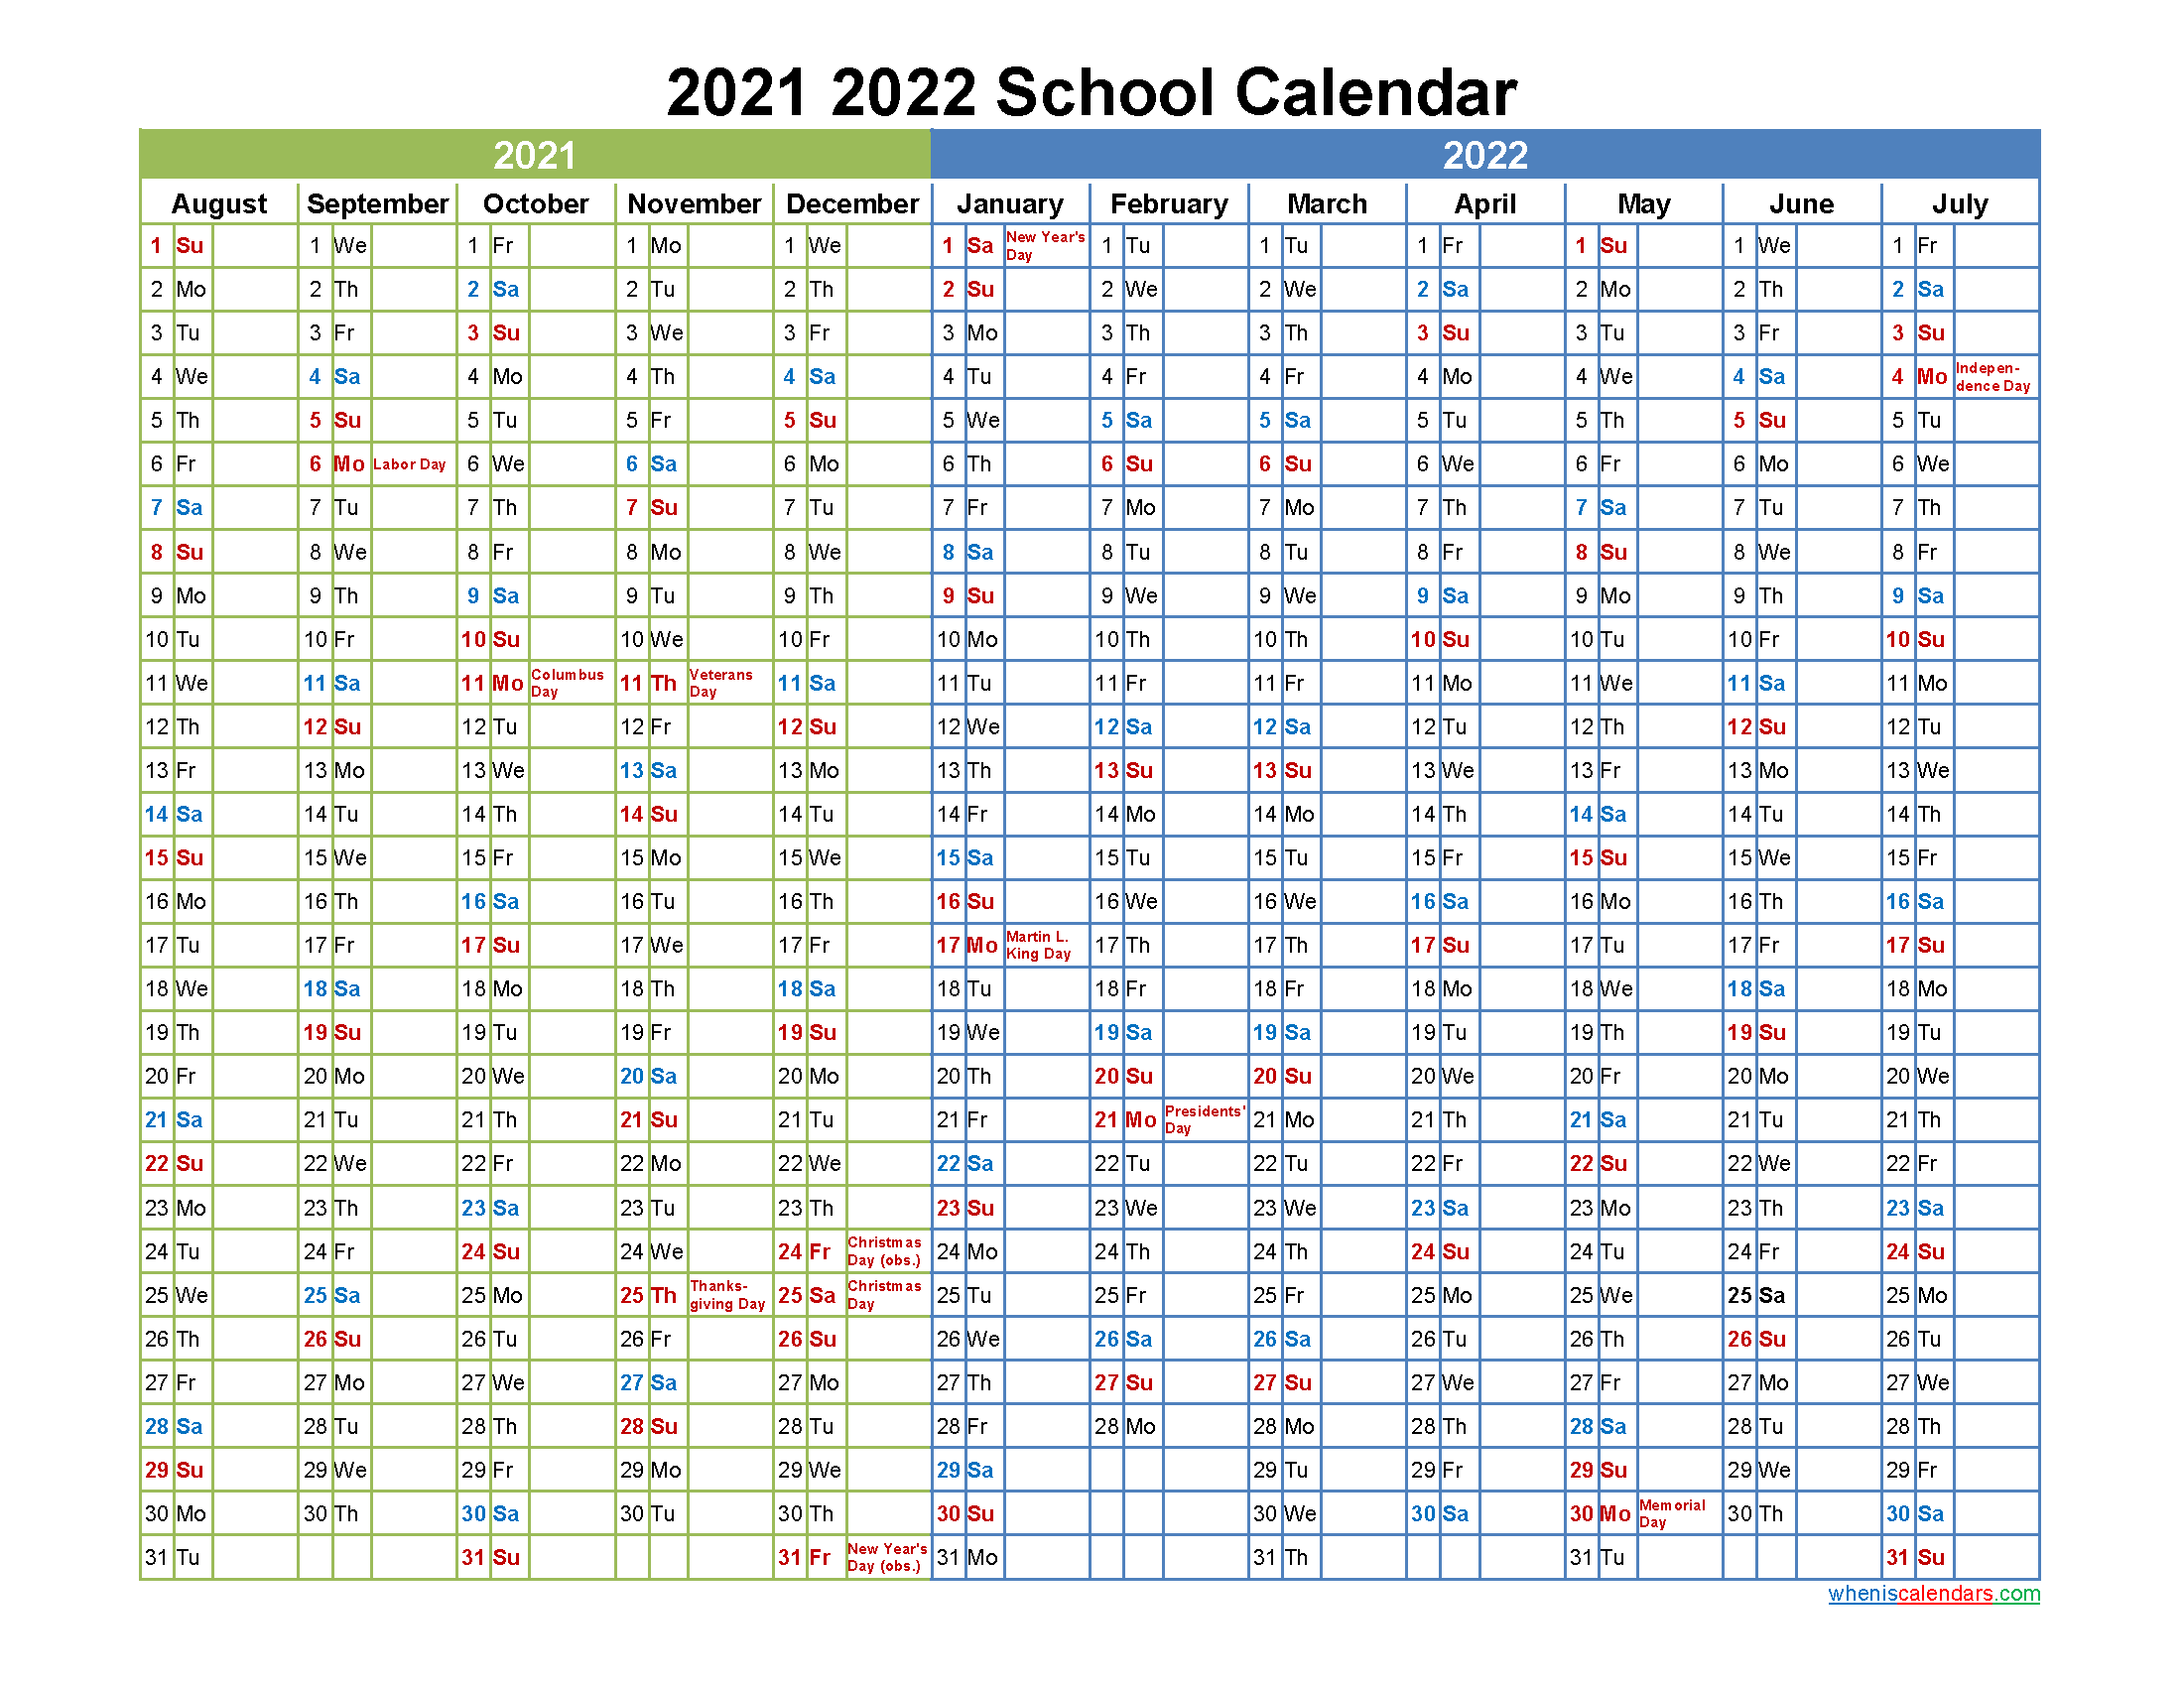 2021 and 2022 School Calendar Printable - Template No.22scl11